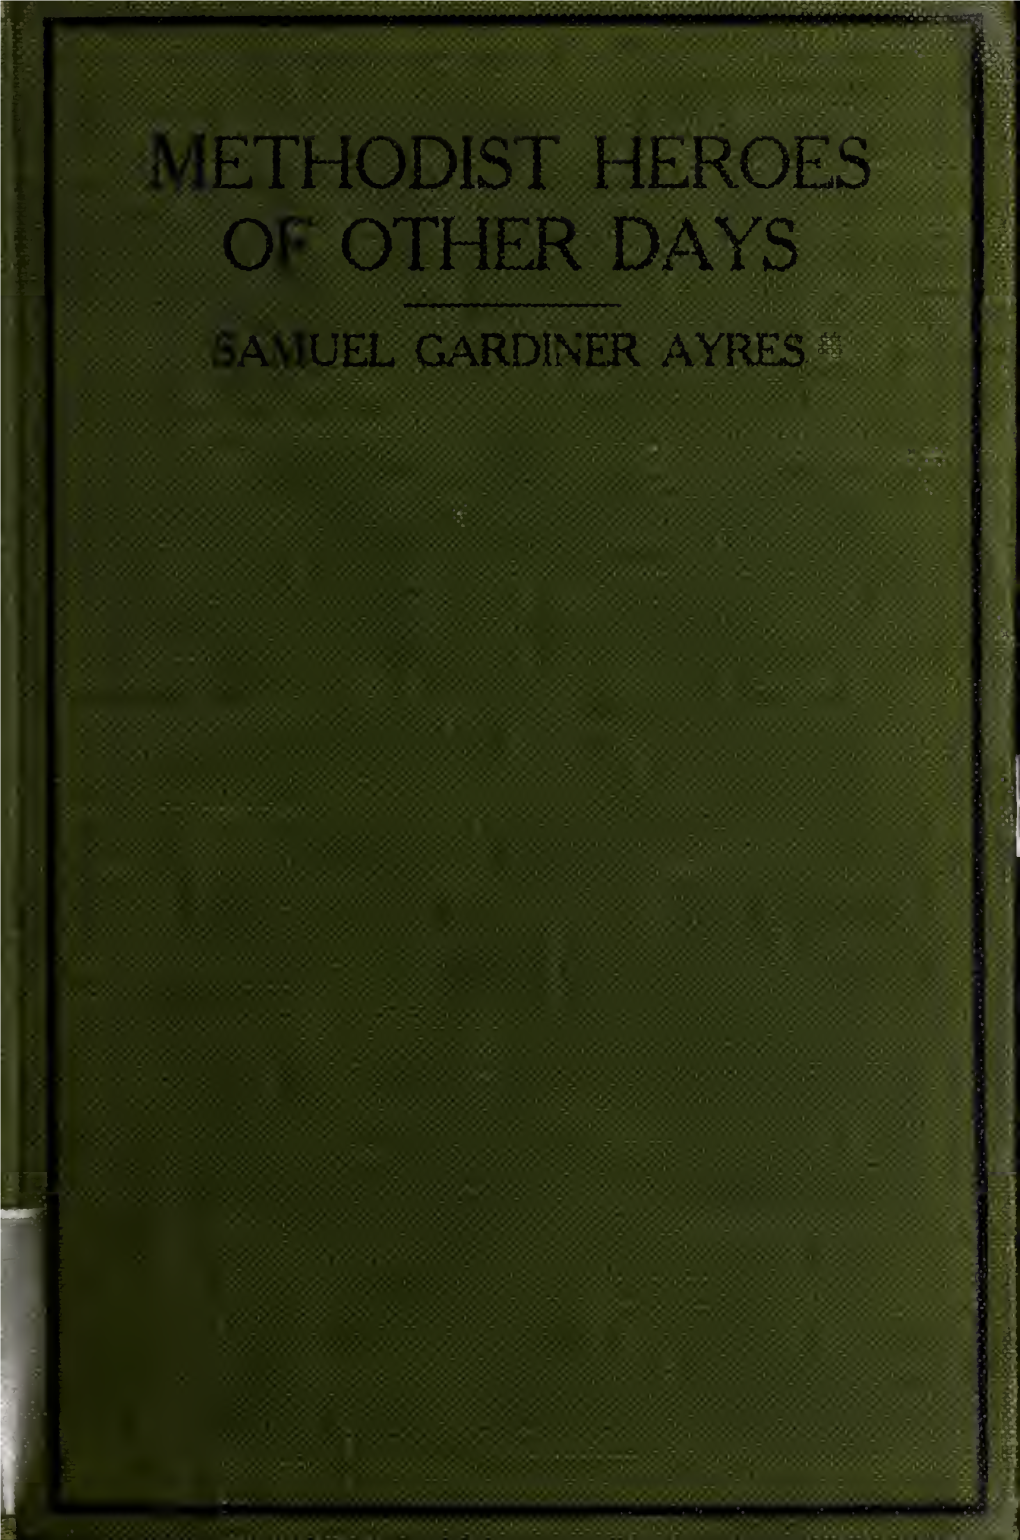 Methodist Heroes of Other Days Samuel Gardiner Ayres May 1 1918